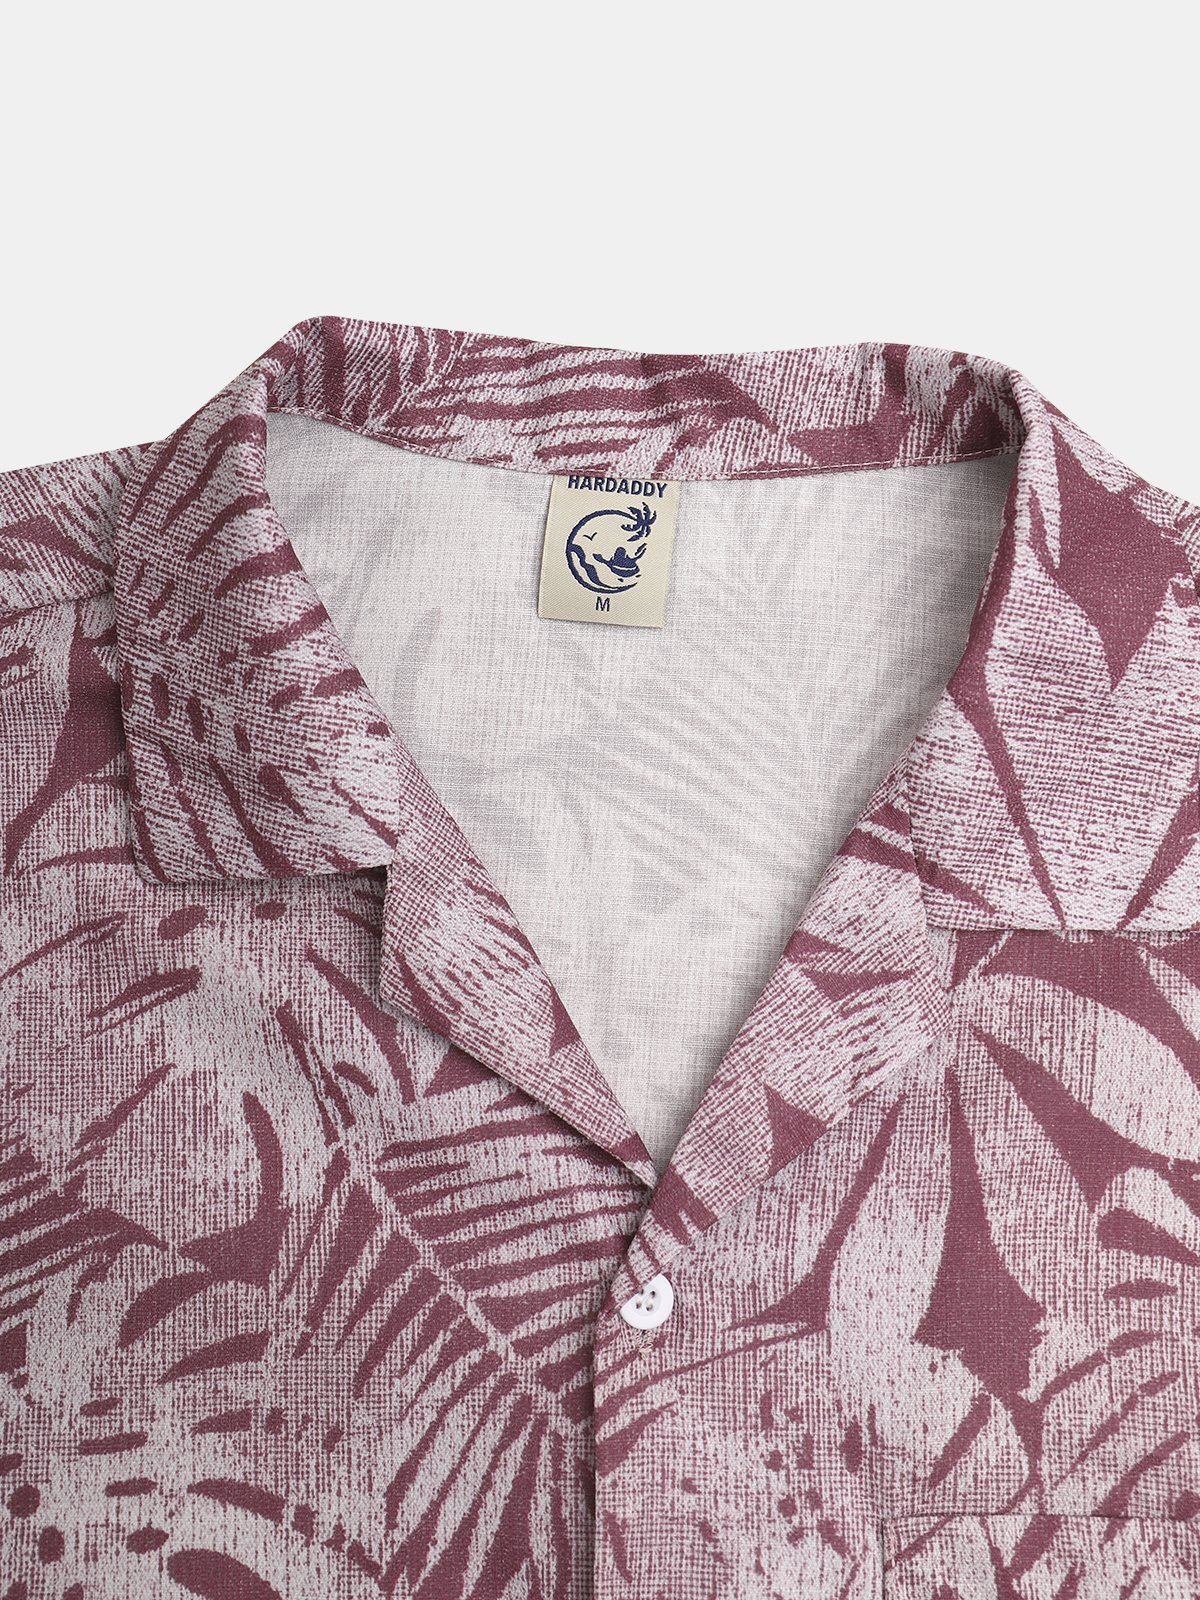 Hawaiian Floral Chest Pocket Short Sleeve Resort Shirt